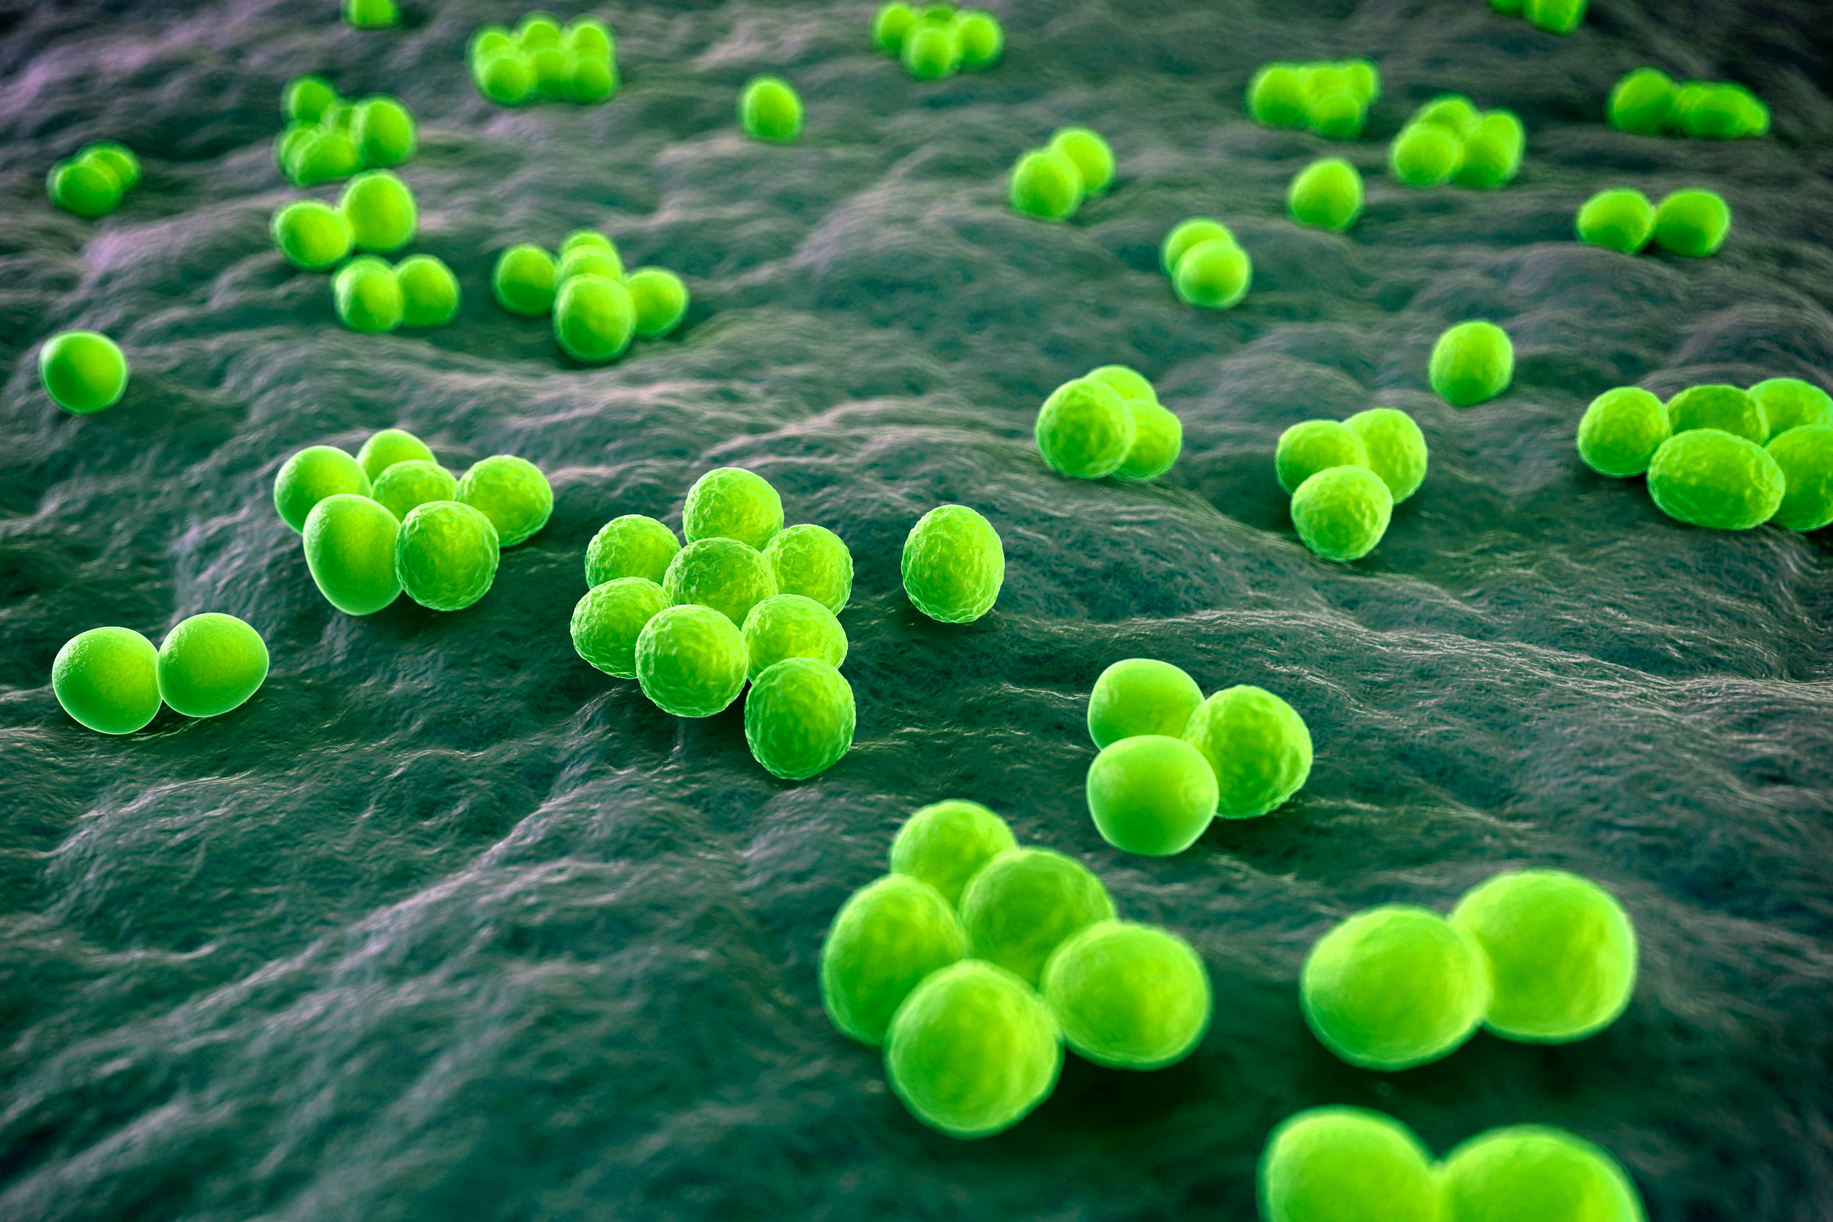 MRSA (methicillin-resistant Staphylococcus aureus) bacteria. (SCIEPRO/Getty Images)